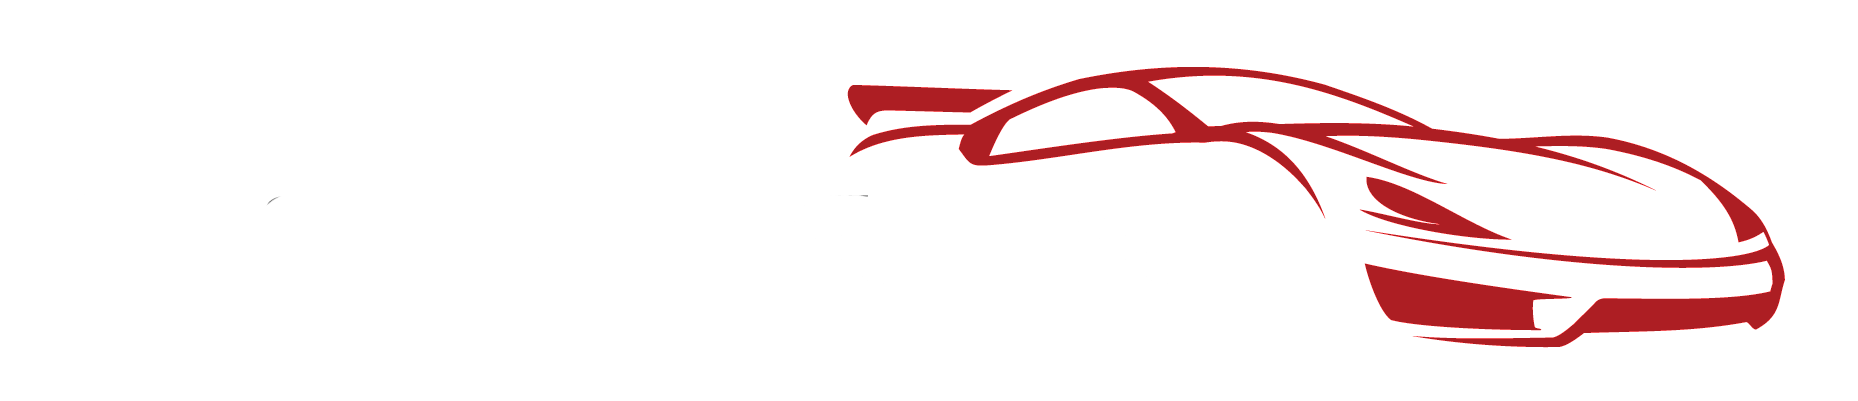 Auto Tinting Logo - Spectra Photoync Arrives in Hawaii